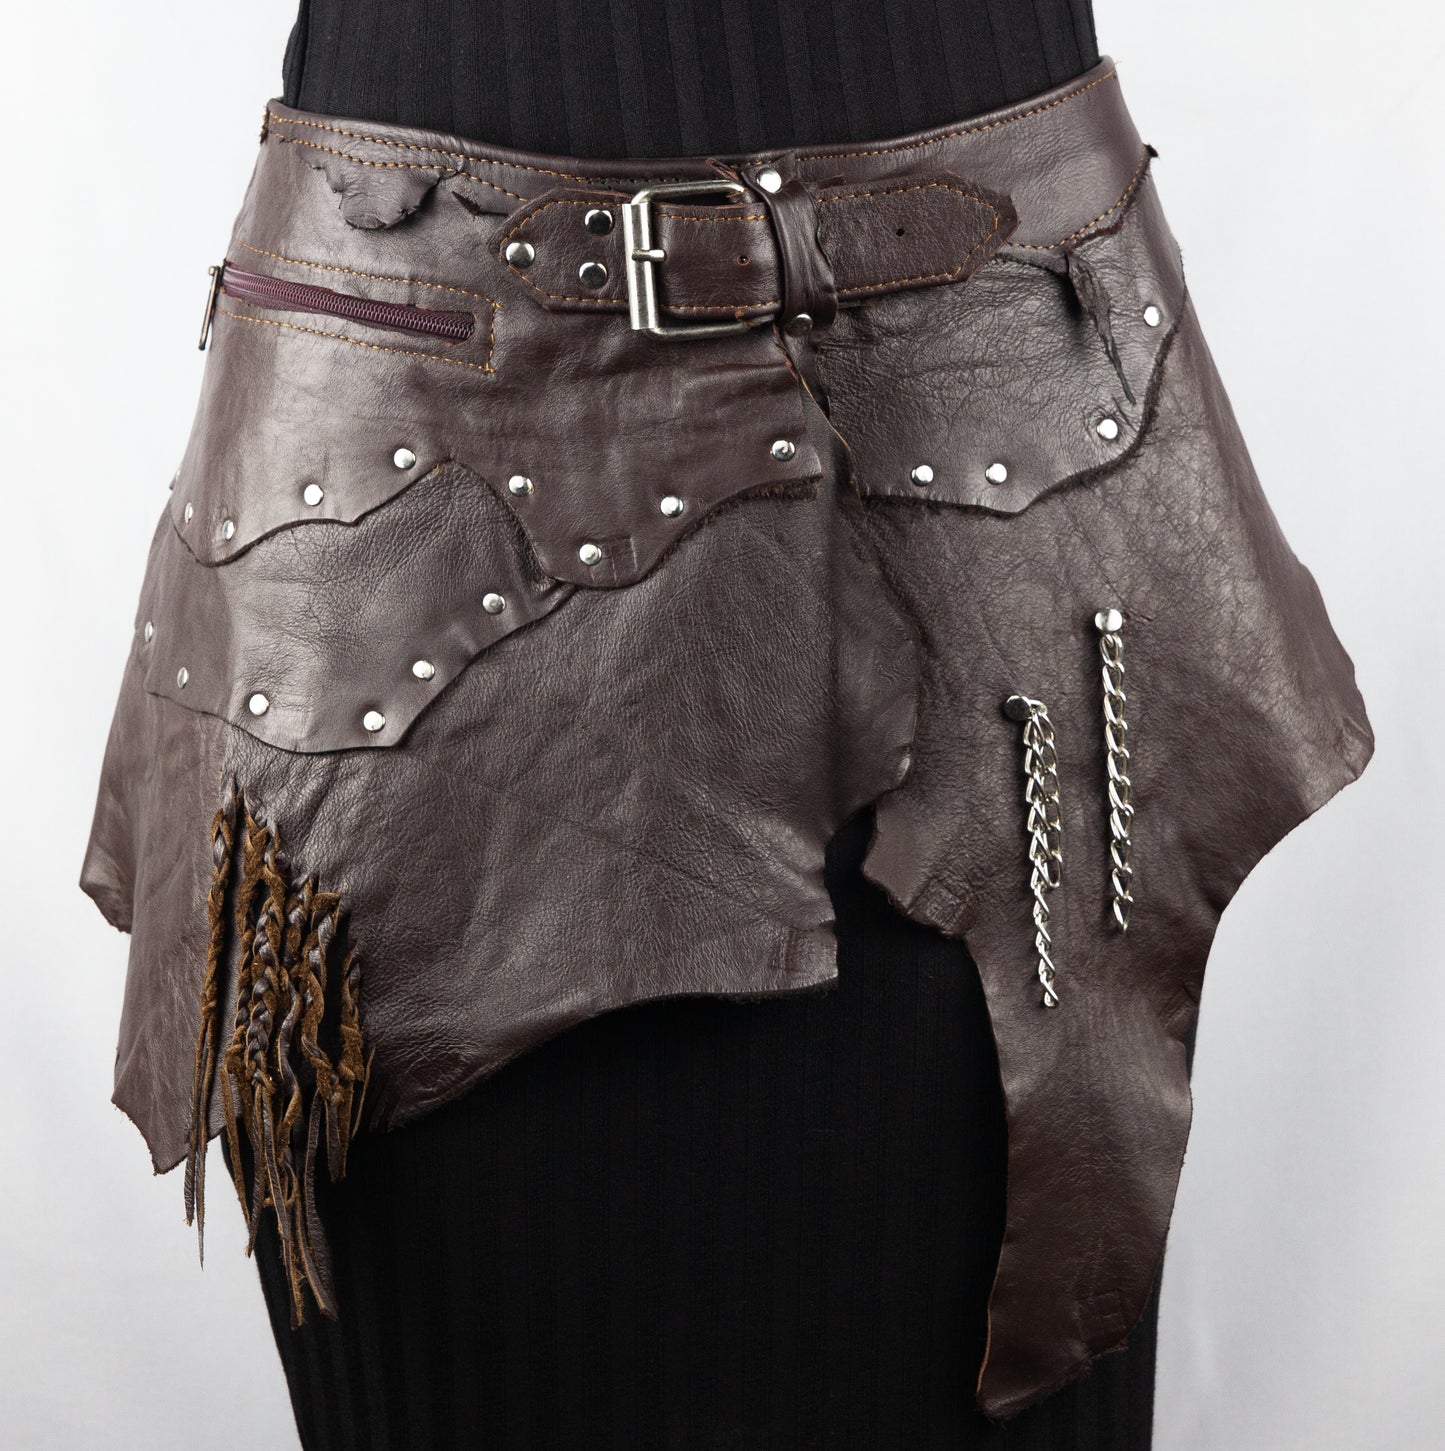 Tribal Boho Skirt with Belt and Zipper